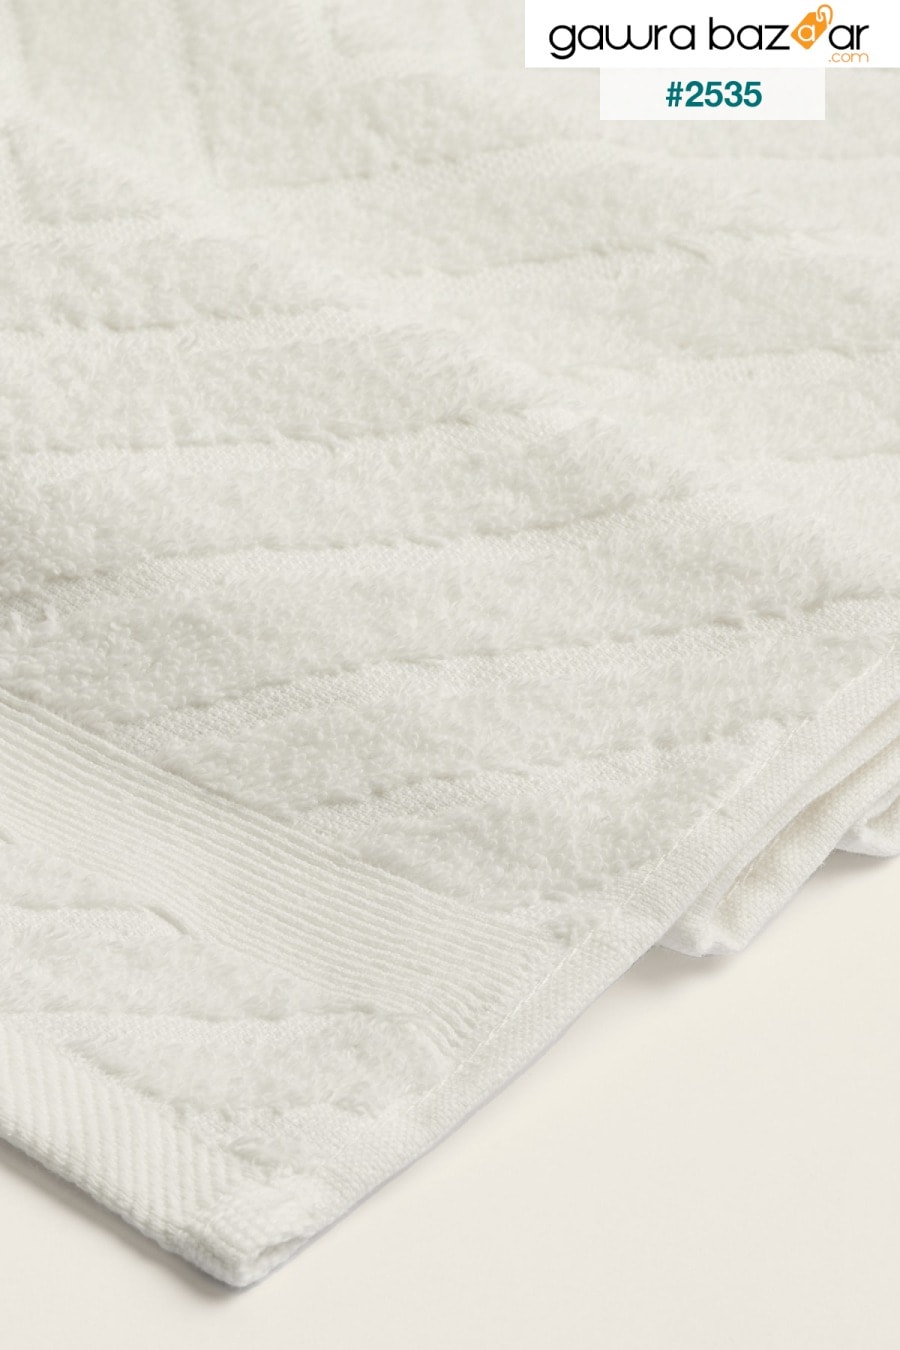 Lycian Jacquard Border Herringbone 4 Pcs Hand Face Towel Set 100٪ Cotton Soft Use Daily Use 1023a Koza Home 2